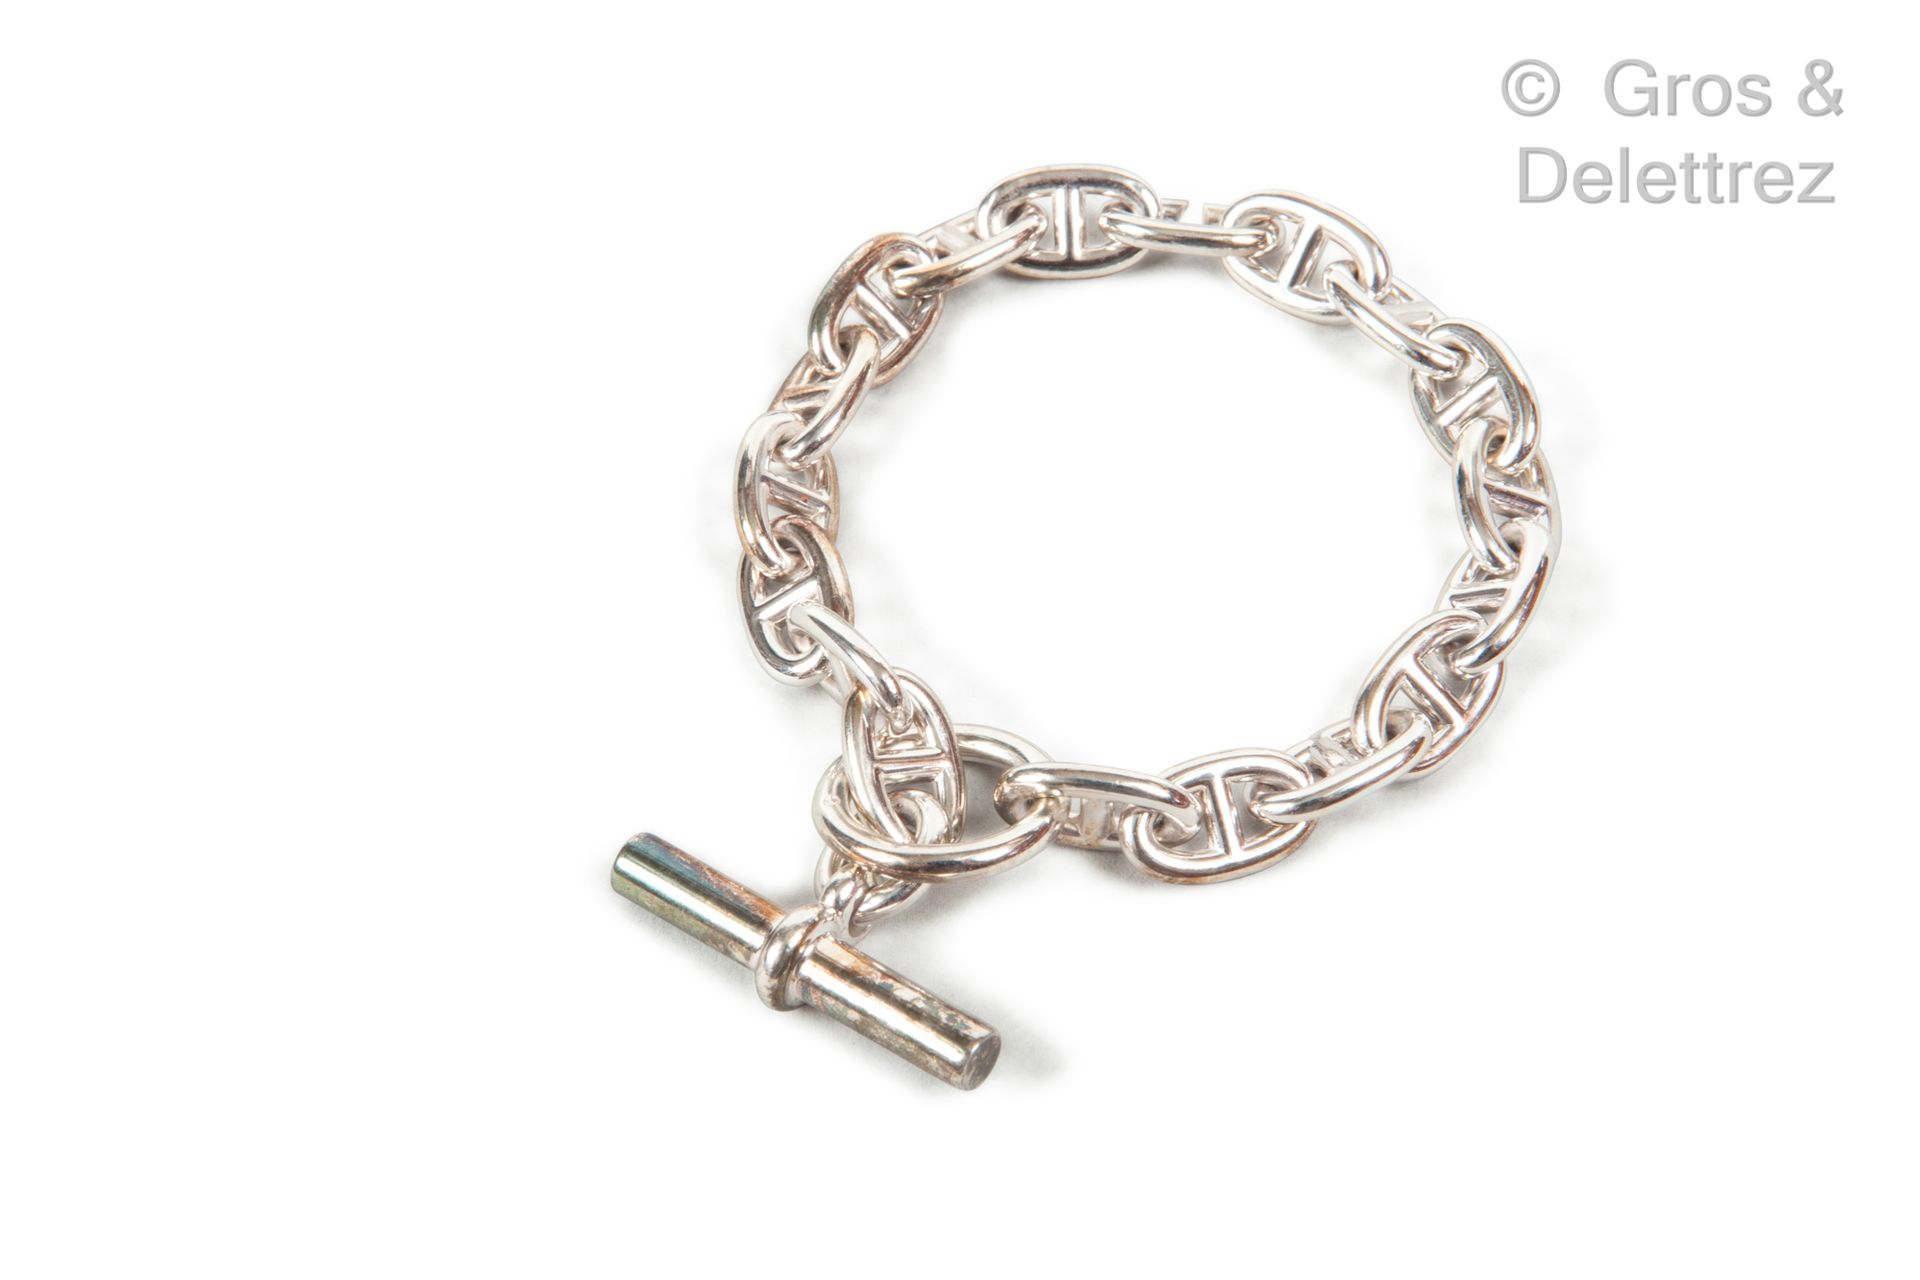 HERMÈS Paris made in France 手链 "锚链 "毫米，银制925千分之一，扣棒，18个环节。长度：23.5厘米。重量：61.7克。